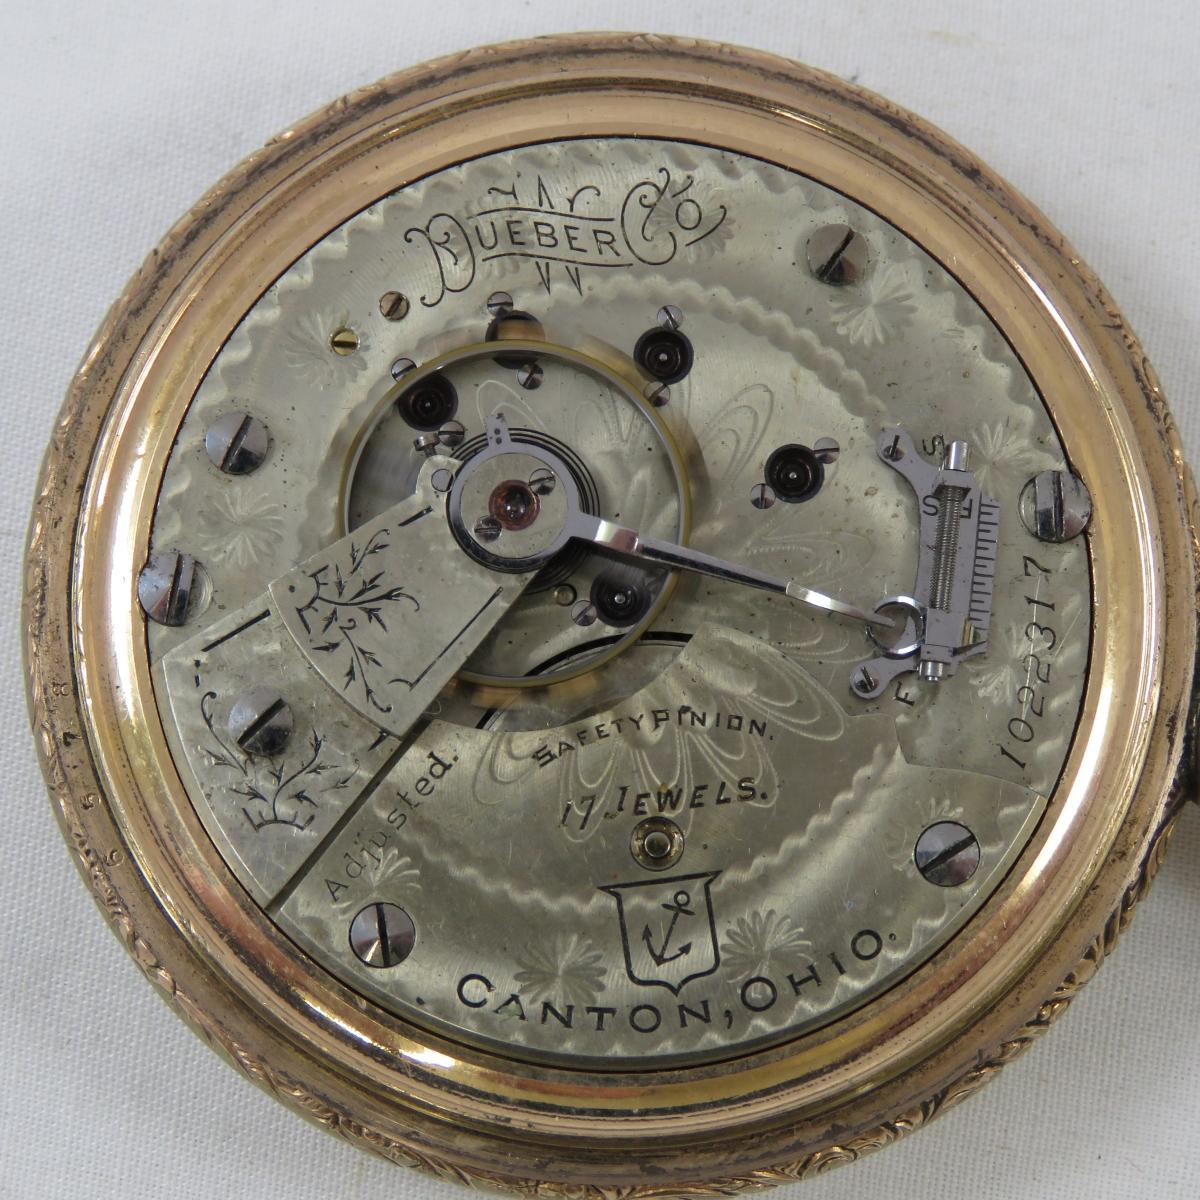 1897 Hampden Dueber Anchor Grade Pocket Watch